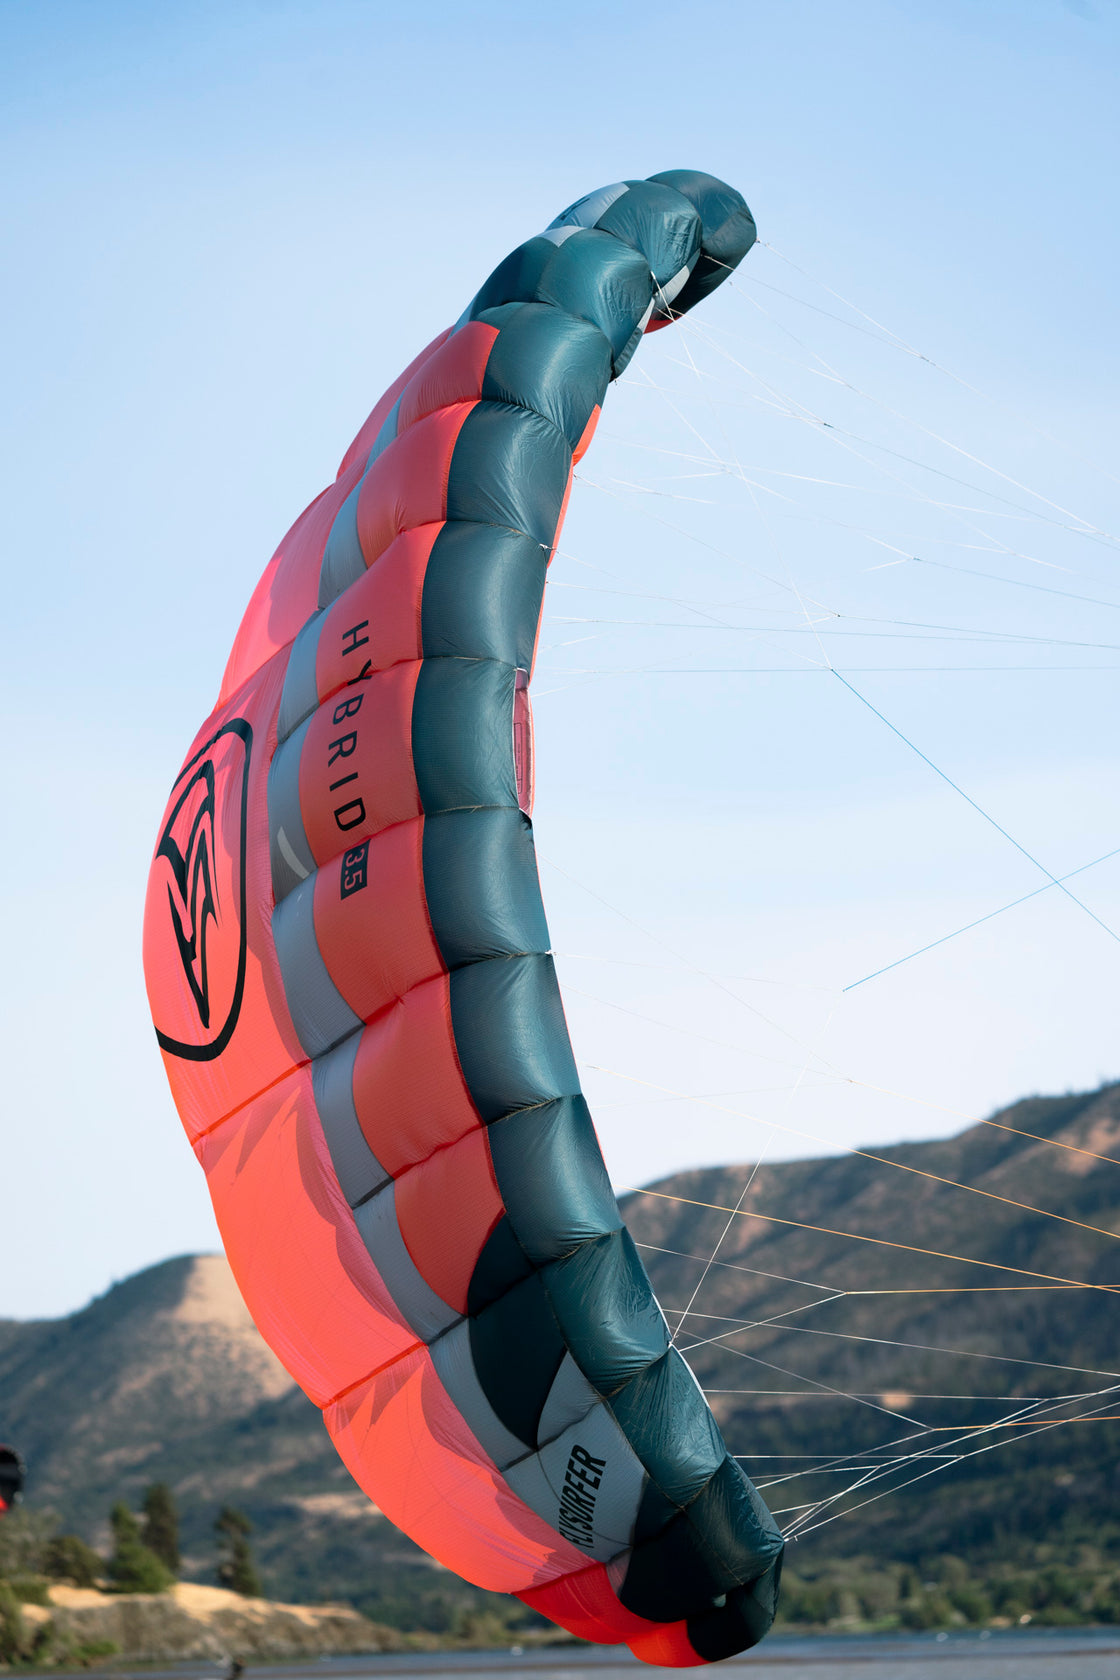 Flysurfer Hybrid Kitesurfing Kite